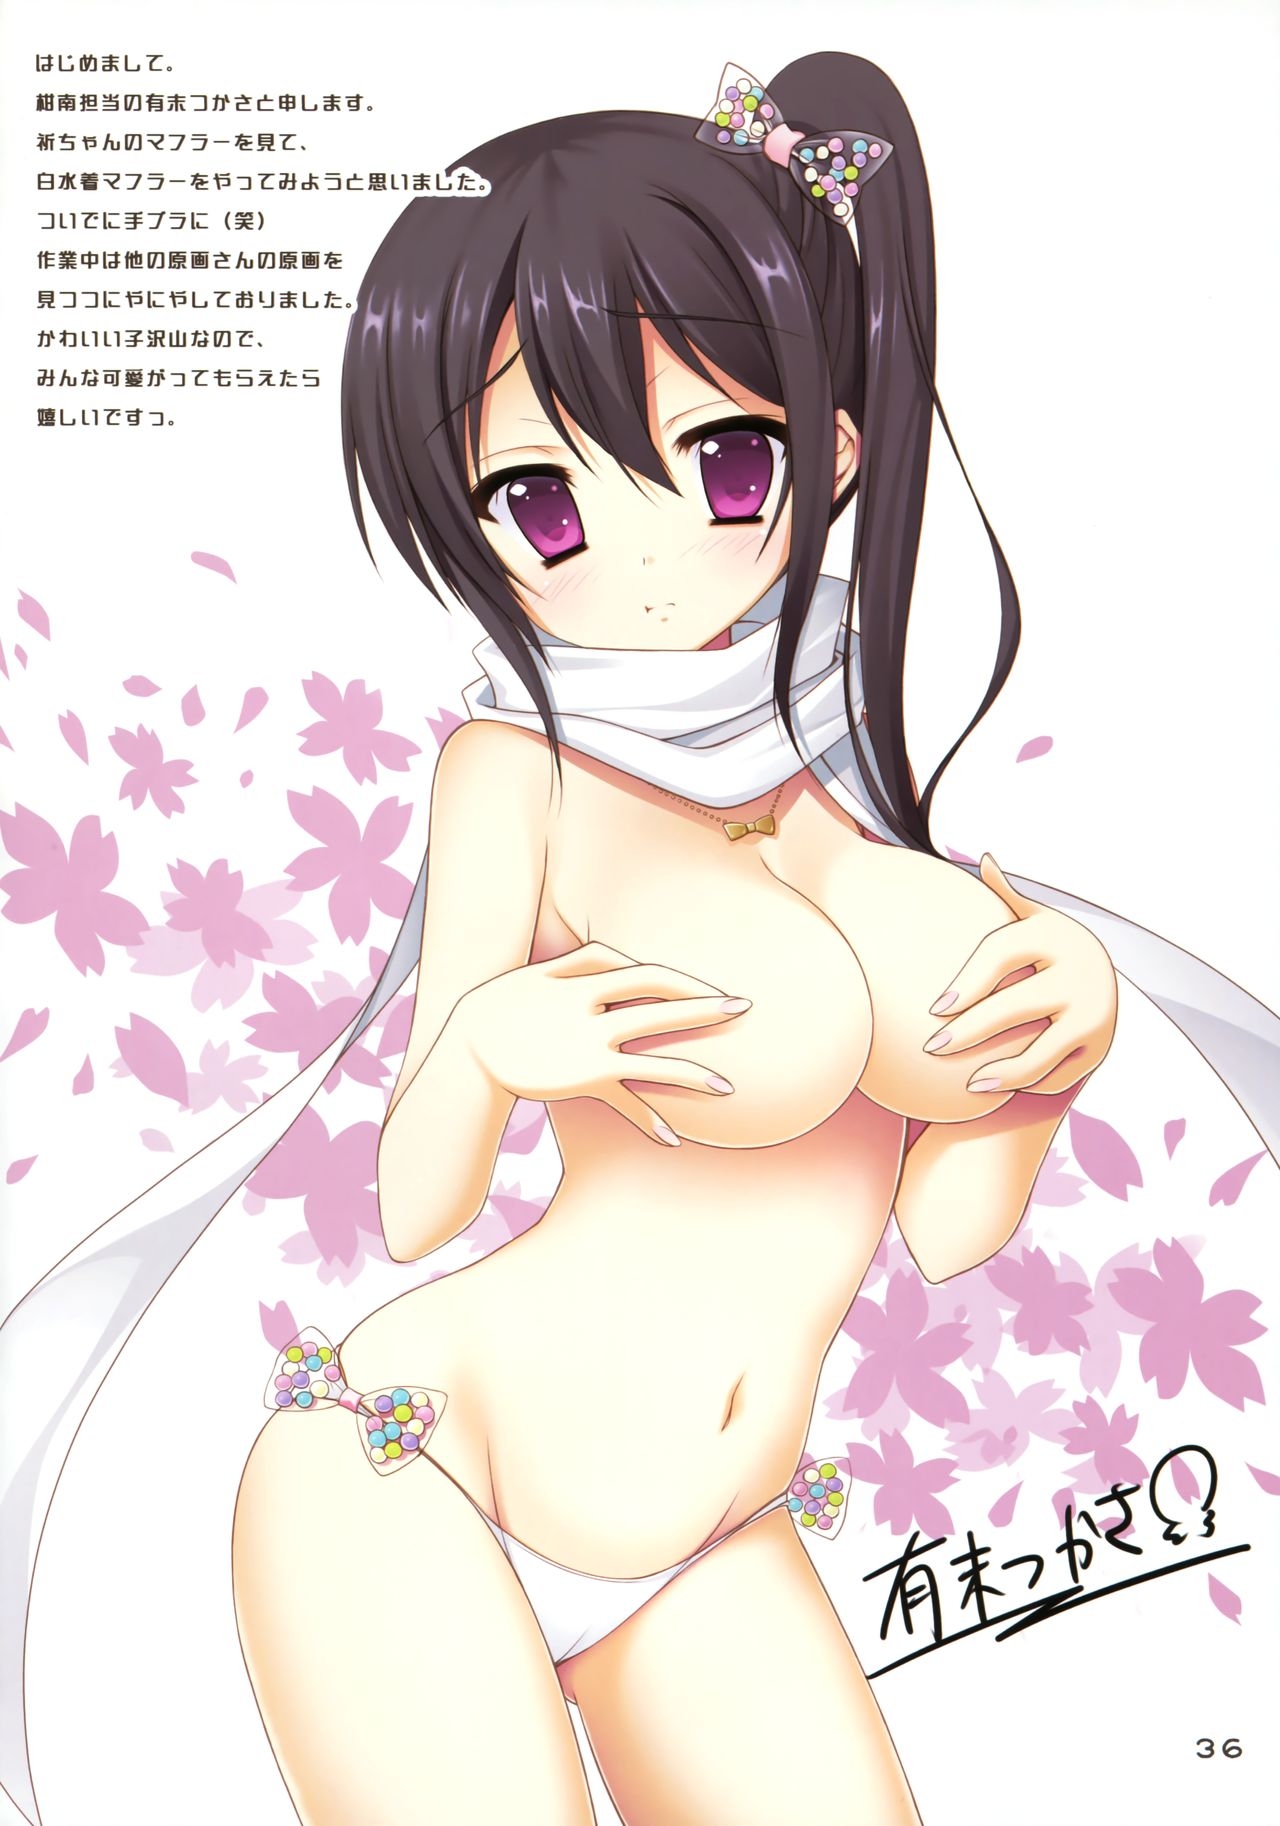 [Saga Planets] Enjoy Spring Book - Hanasaki Work Spring! Settei Gengashuu [Incomplete] 11